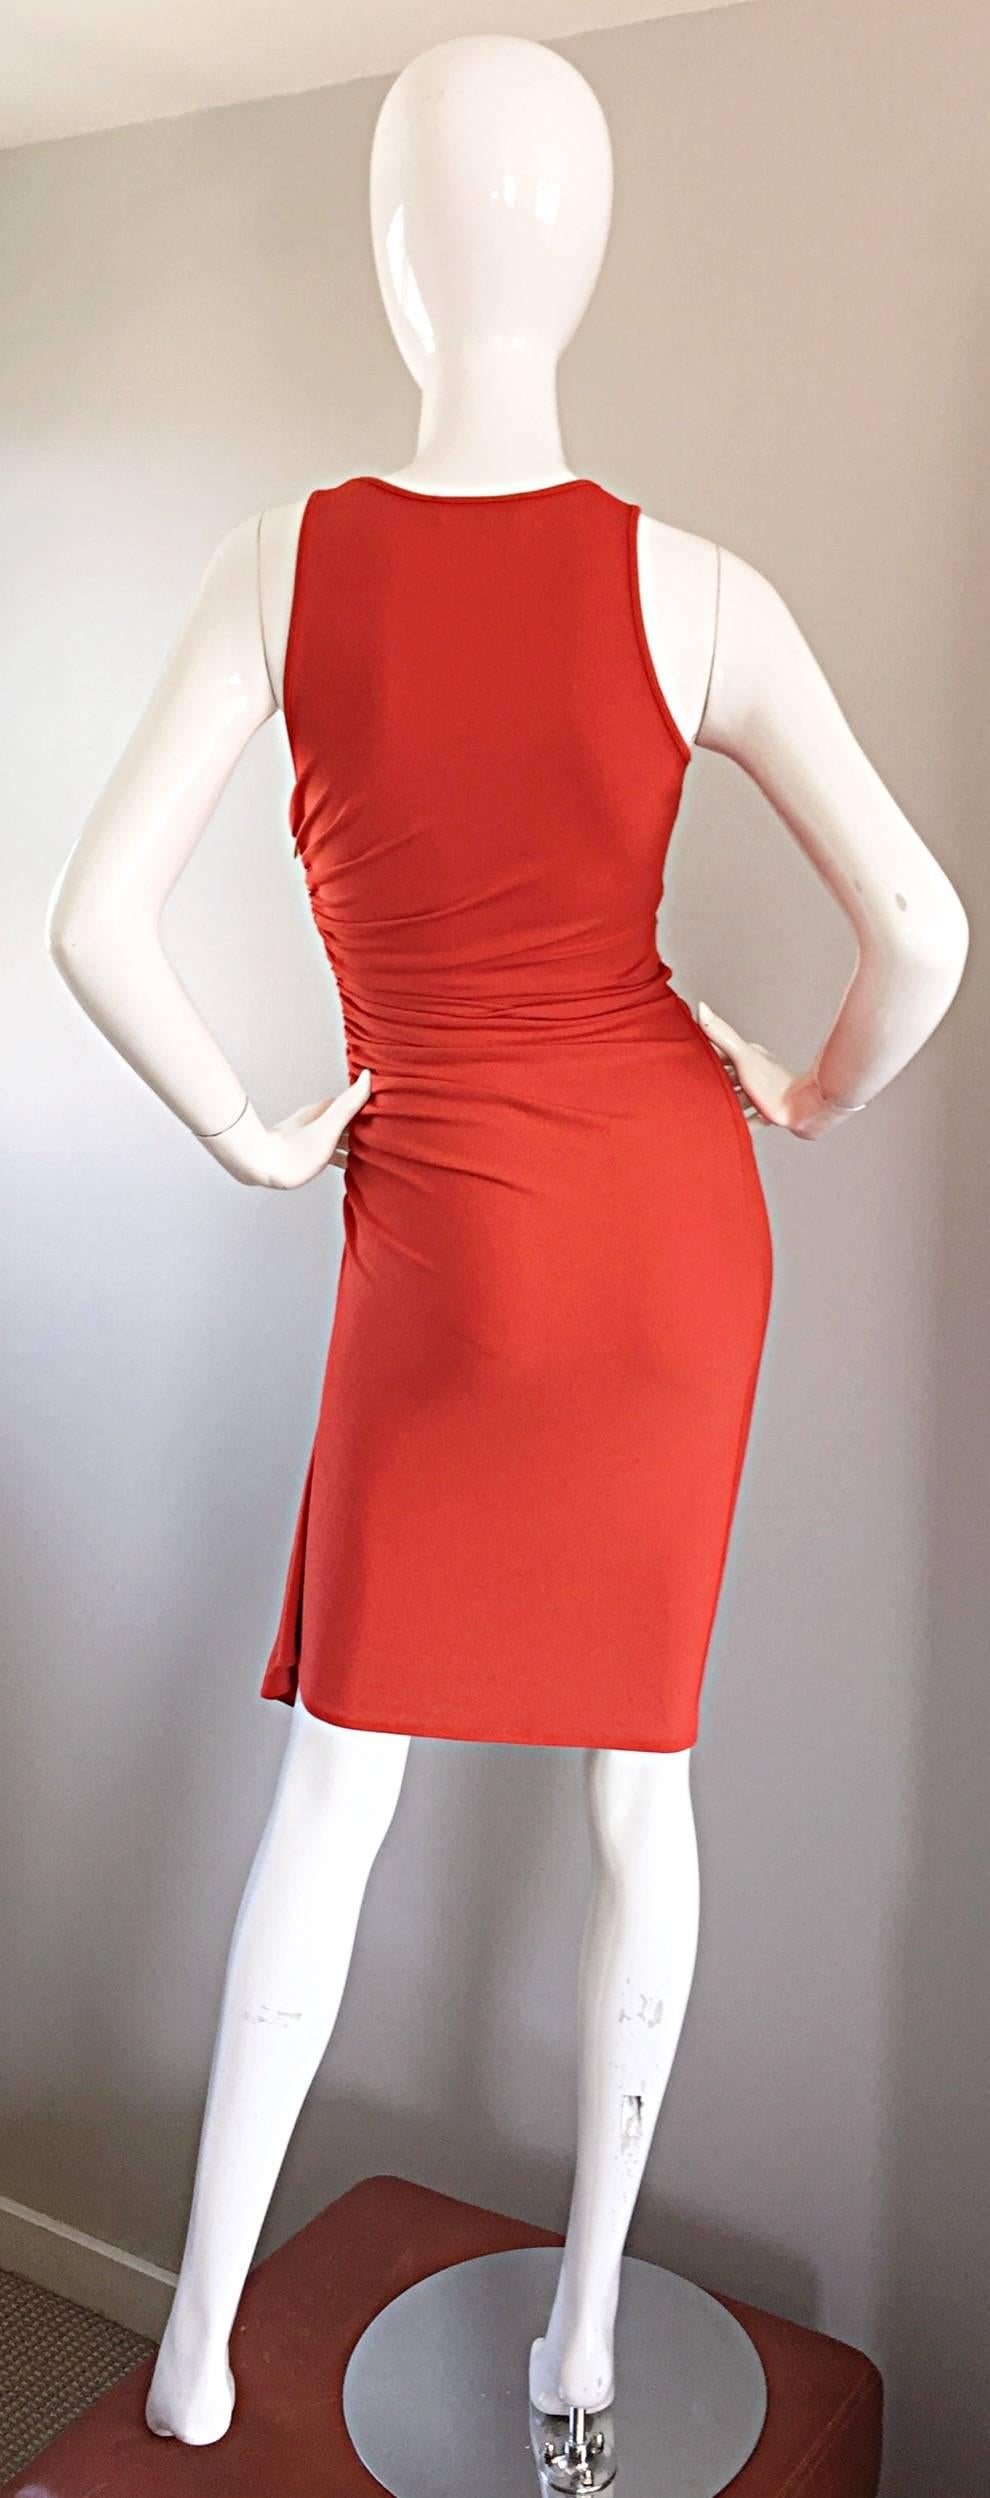 Michael Kors Collection Burnt Orange Runway Grecian Bodycon Jersey Dress Size 2 2